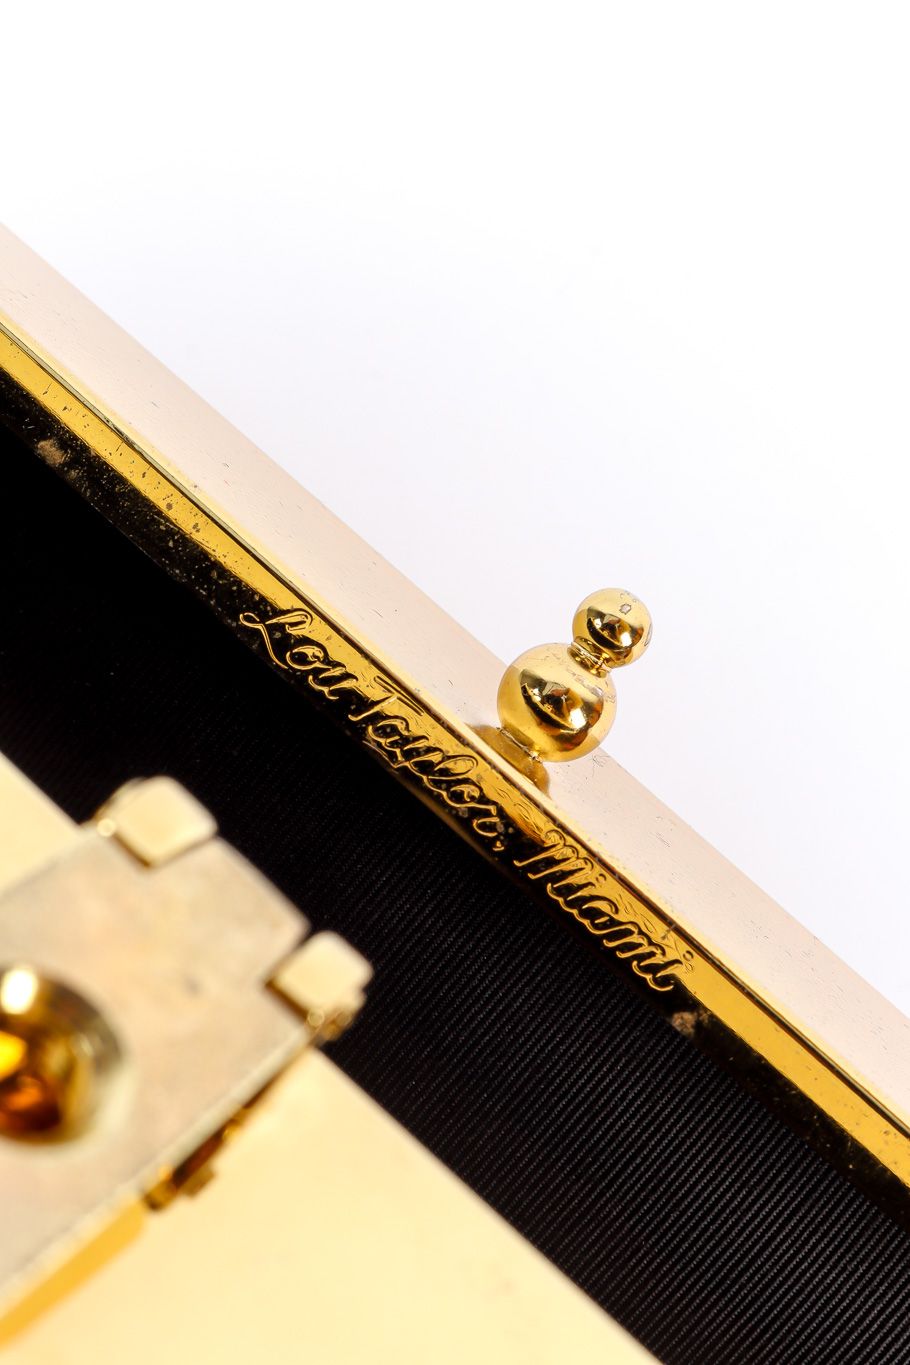 Lou Taylor gold frame box purse designer signature @recessla